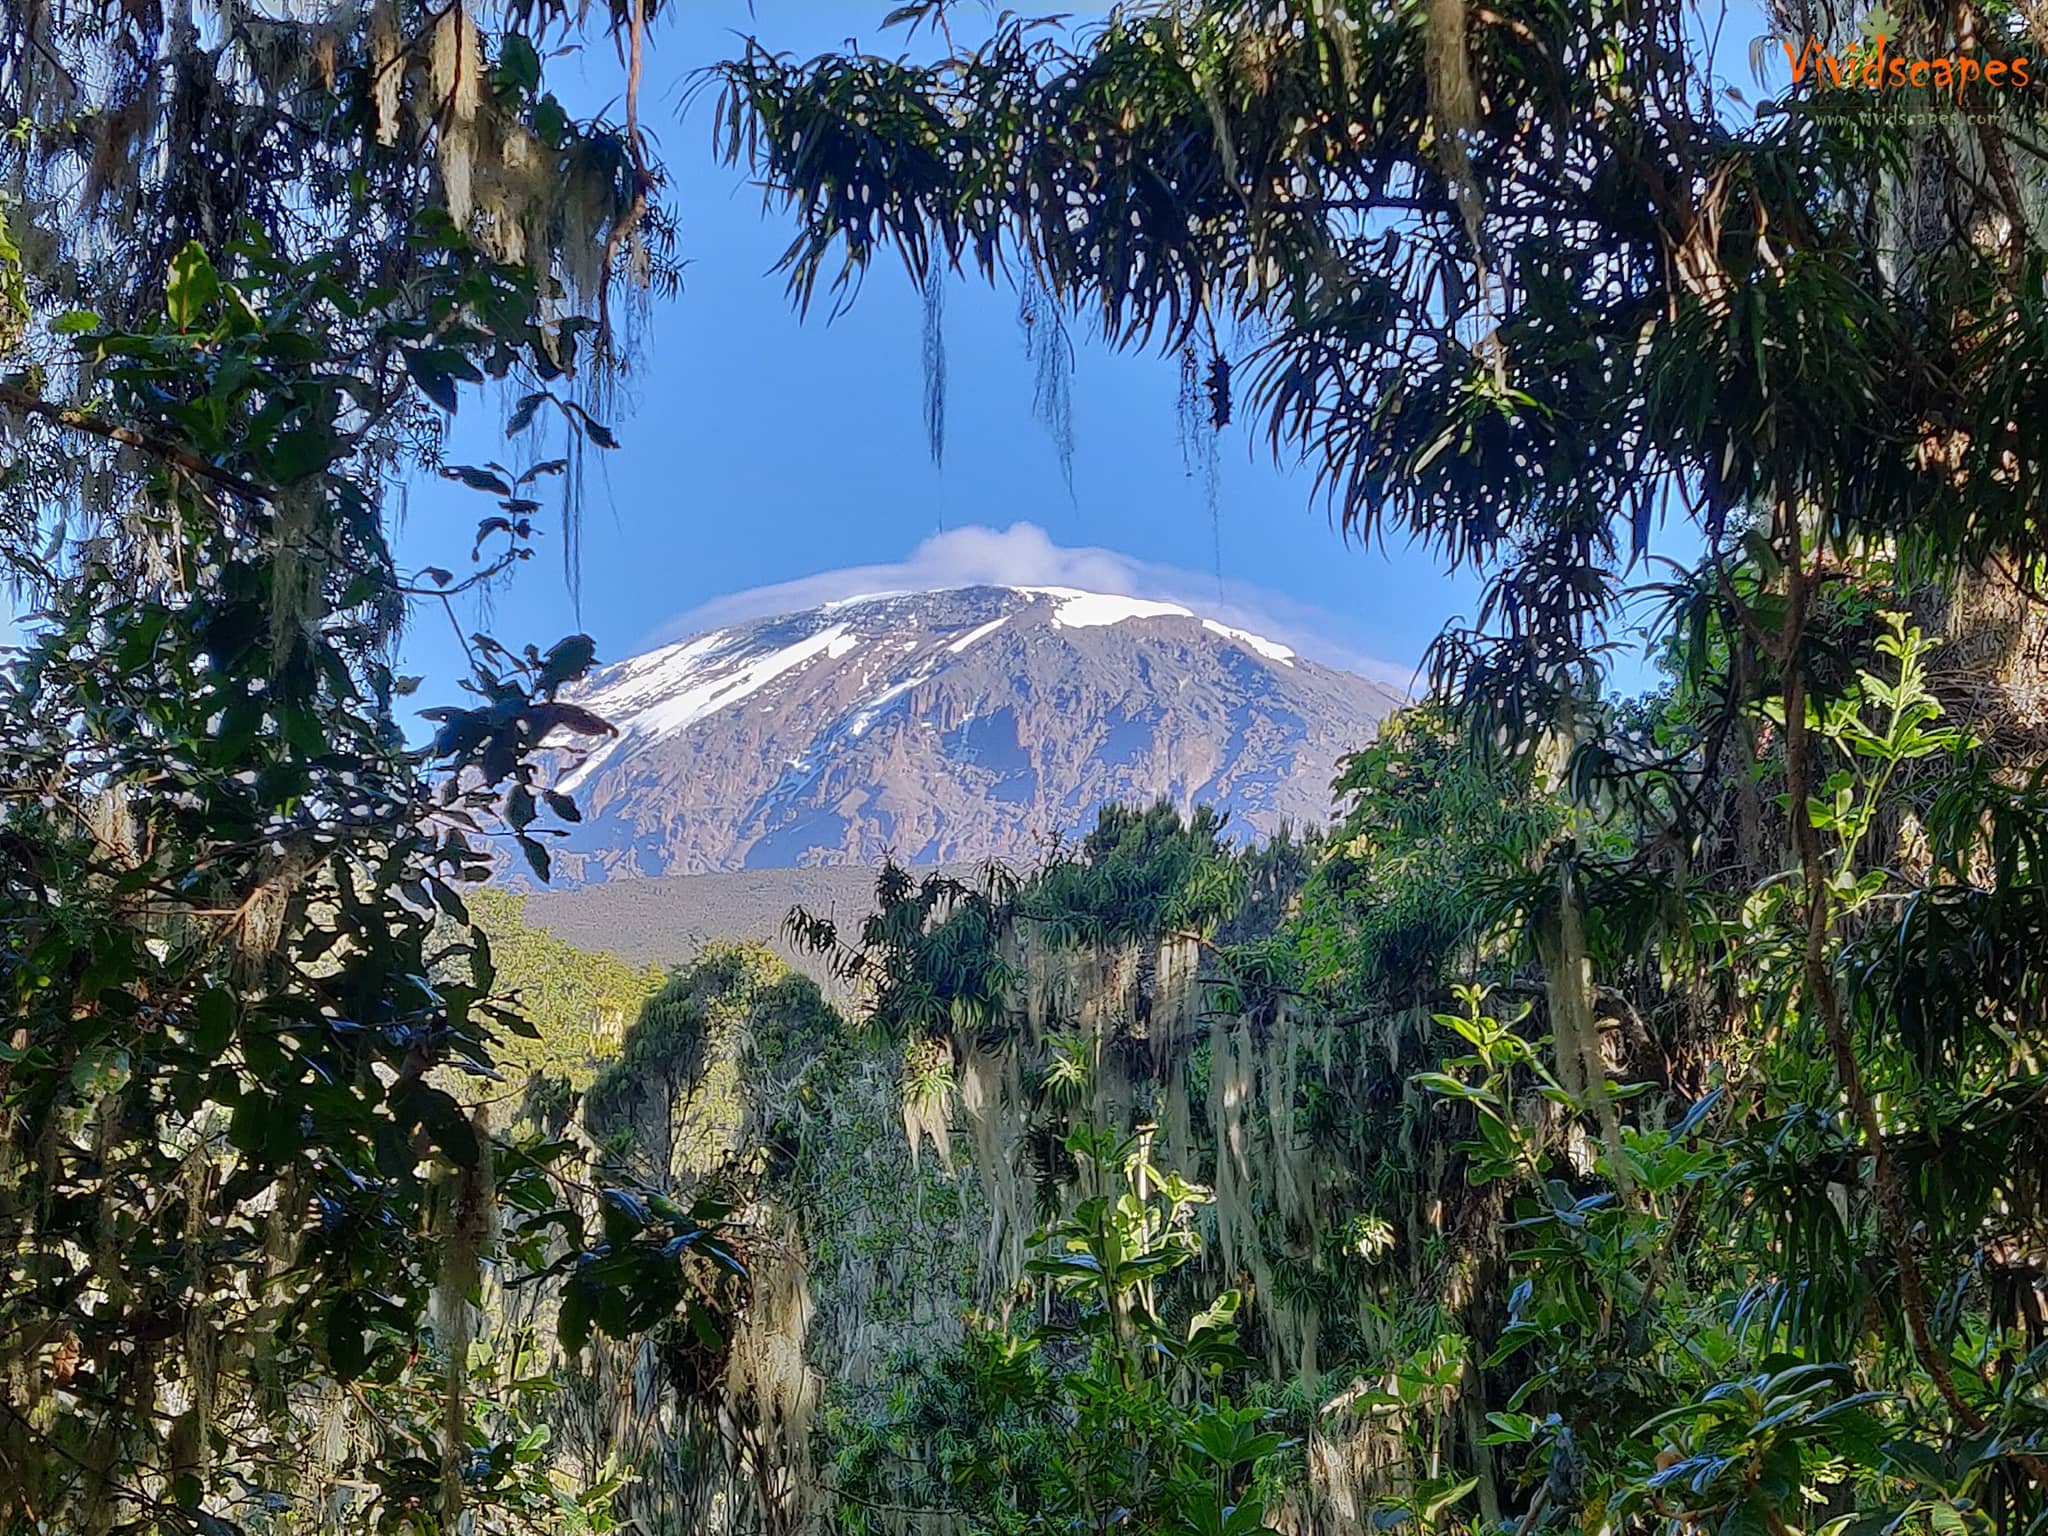 View of Kilimanjaro from the mweka trail